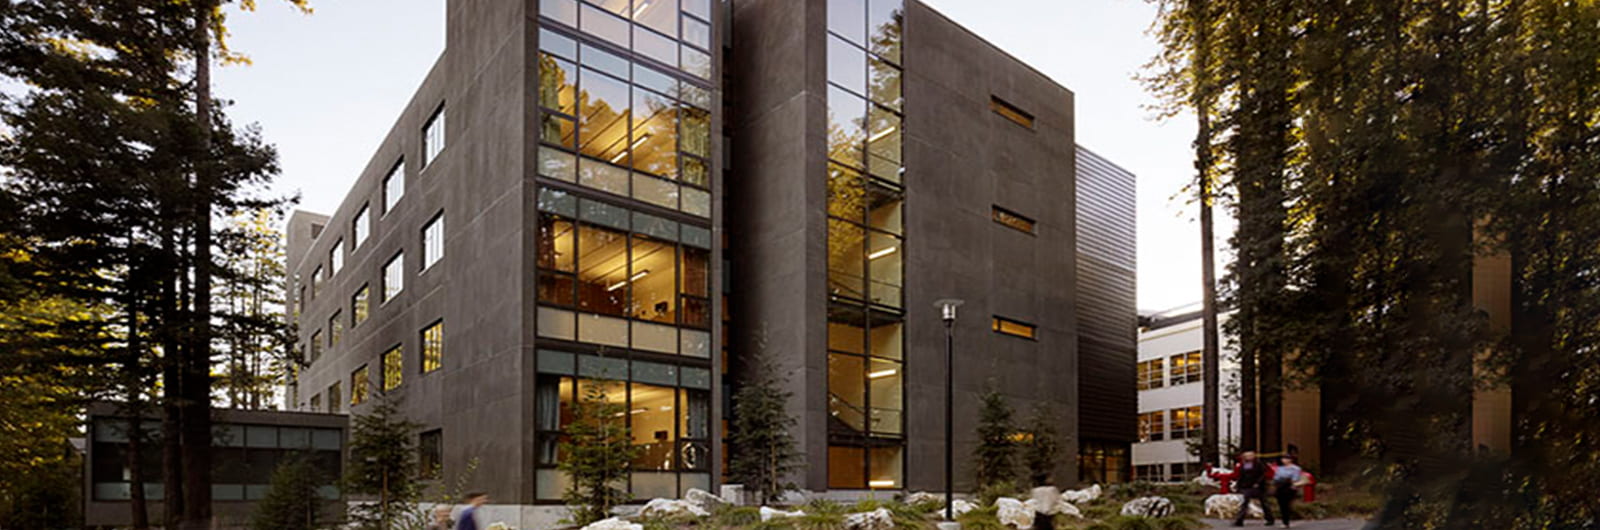 Biomedical Sciences Building (BioMed)